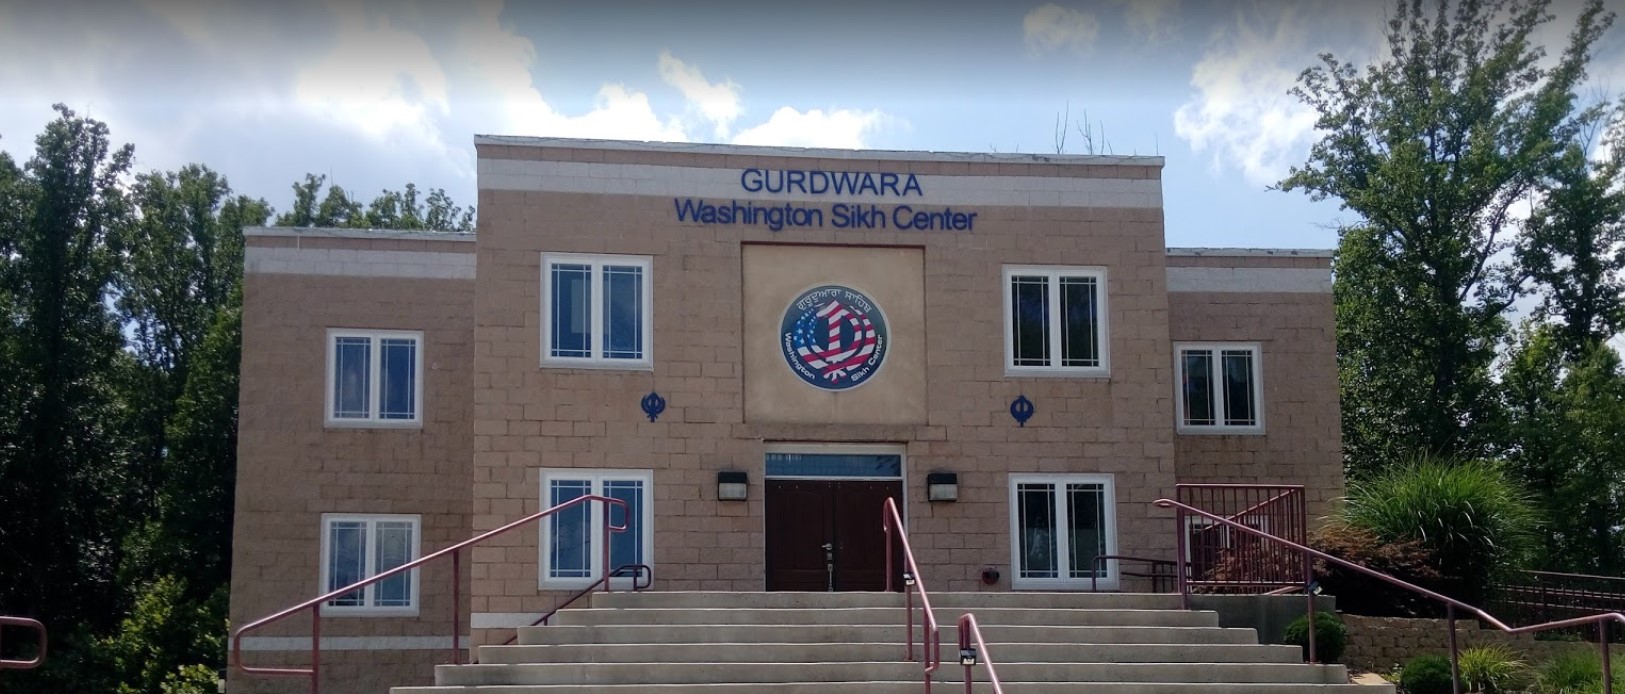 Gurdwara Washington Sikh Center